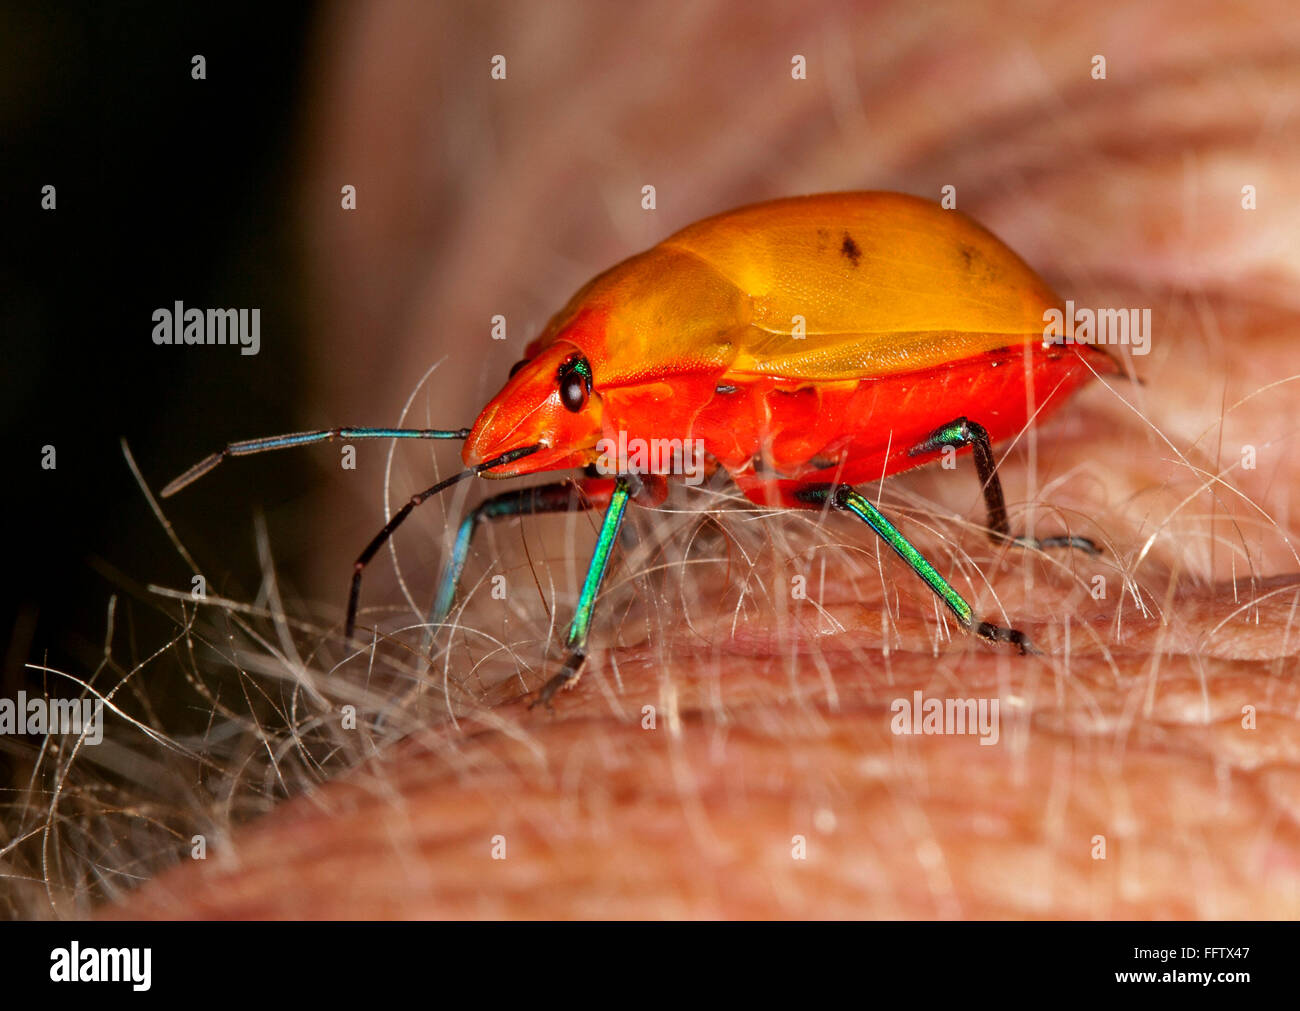 Spectacular vivid orange & red insect, Australian harlequin / jewel bug,  Tectocoris diophthalmus among hair on arm of gardener Stock Photo - Alamy